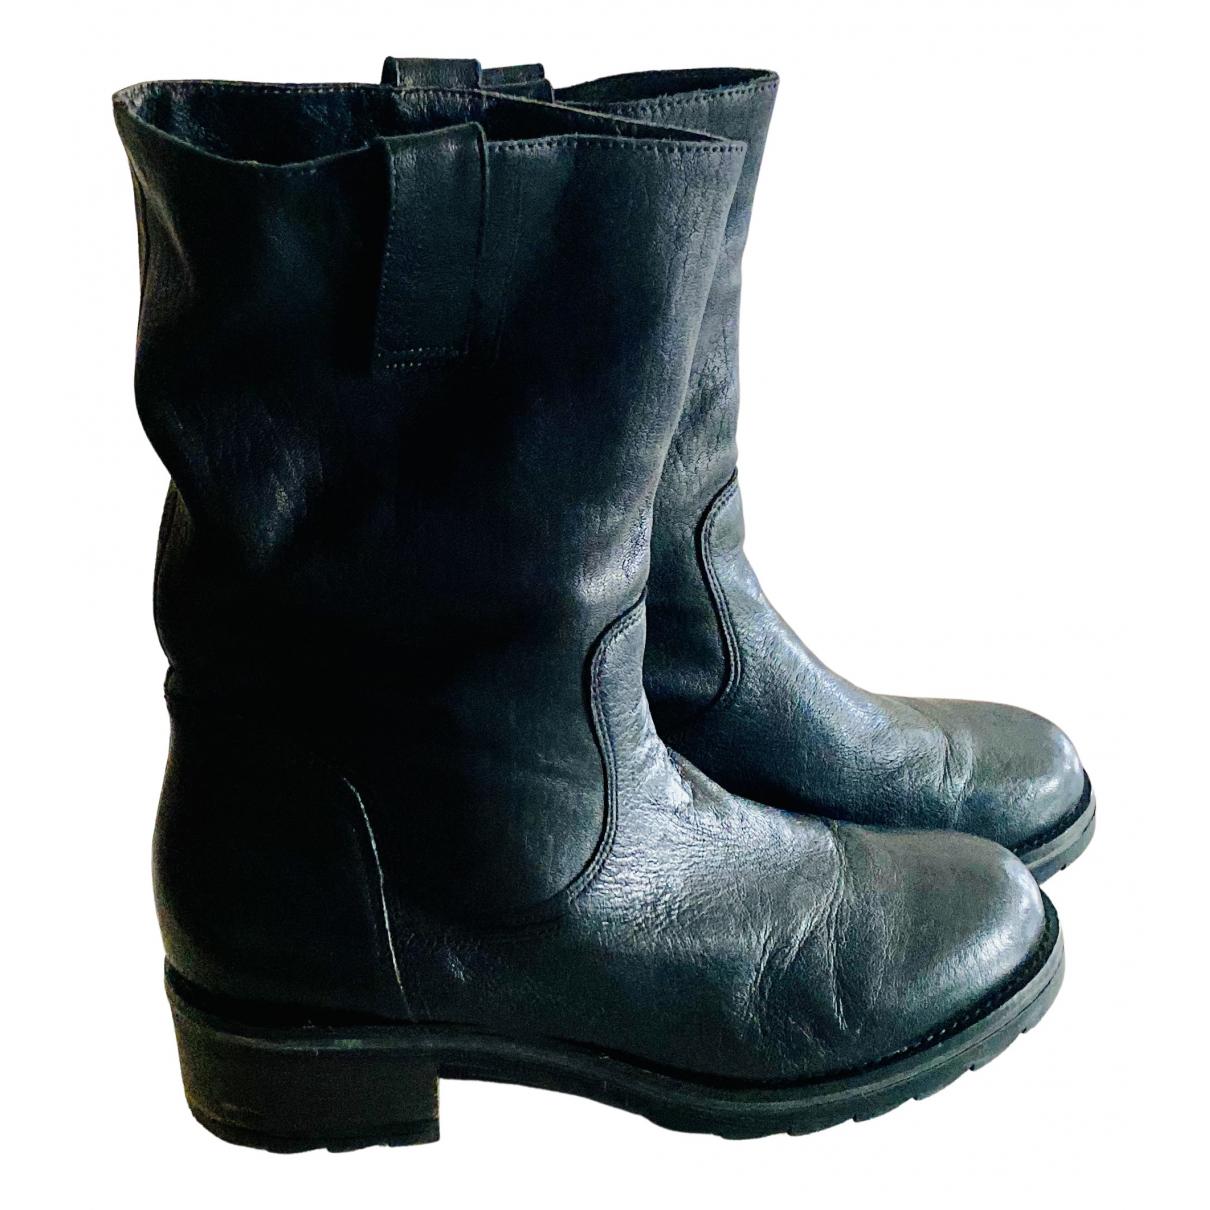 Leather biker boots Parosh Black size 40 IT in Leather - 14032371